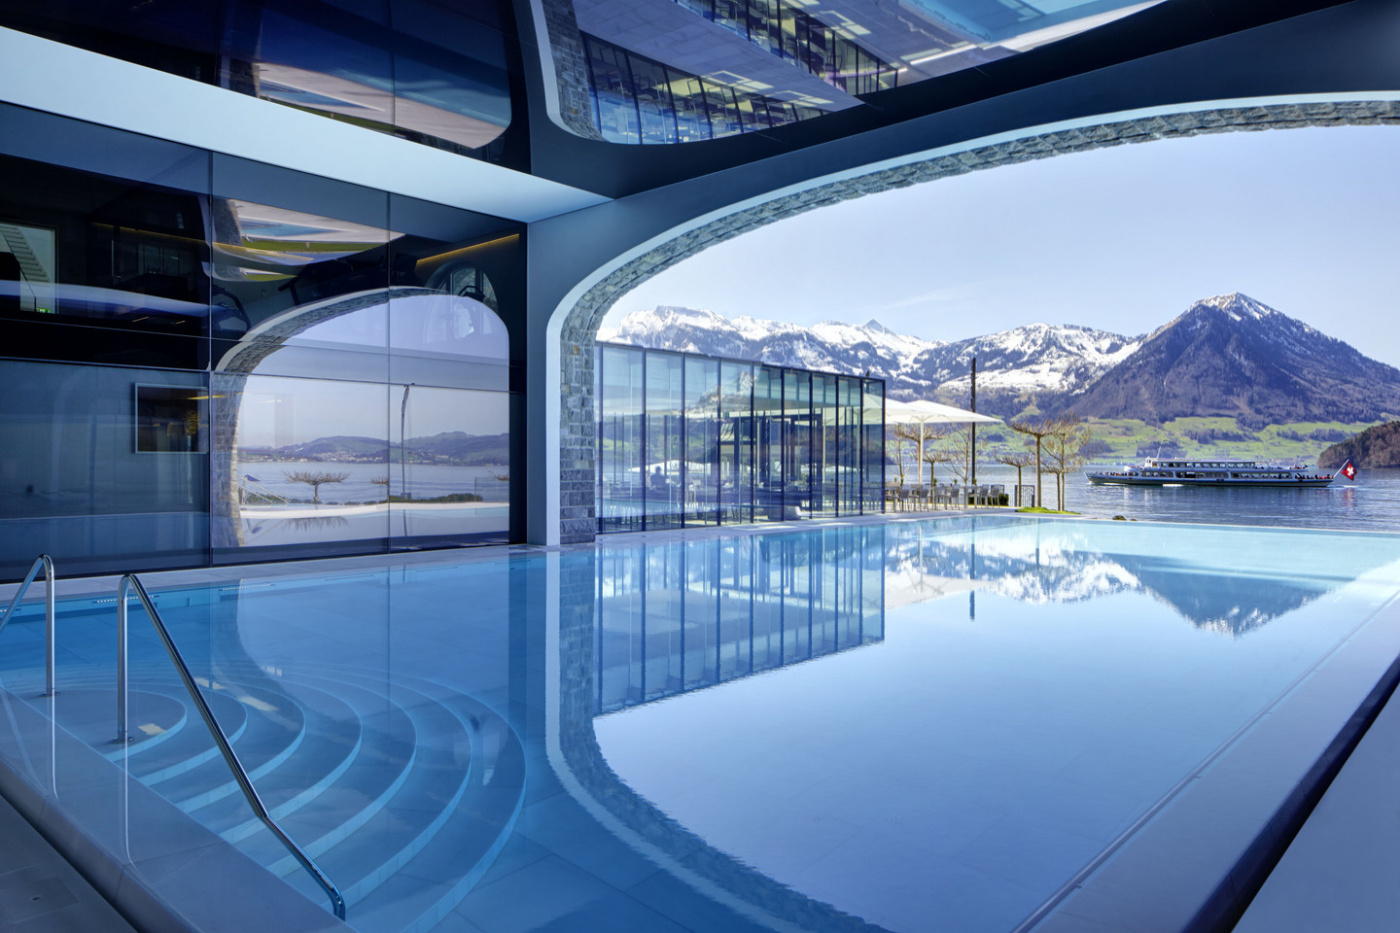 Pool and Spa of luxury wedding venue on Lake Lucerne